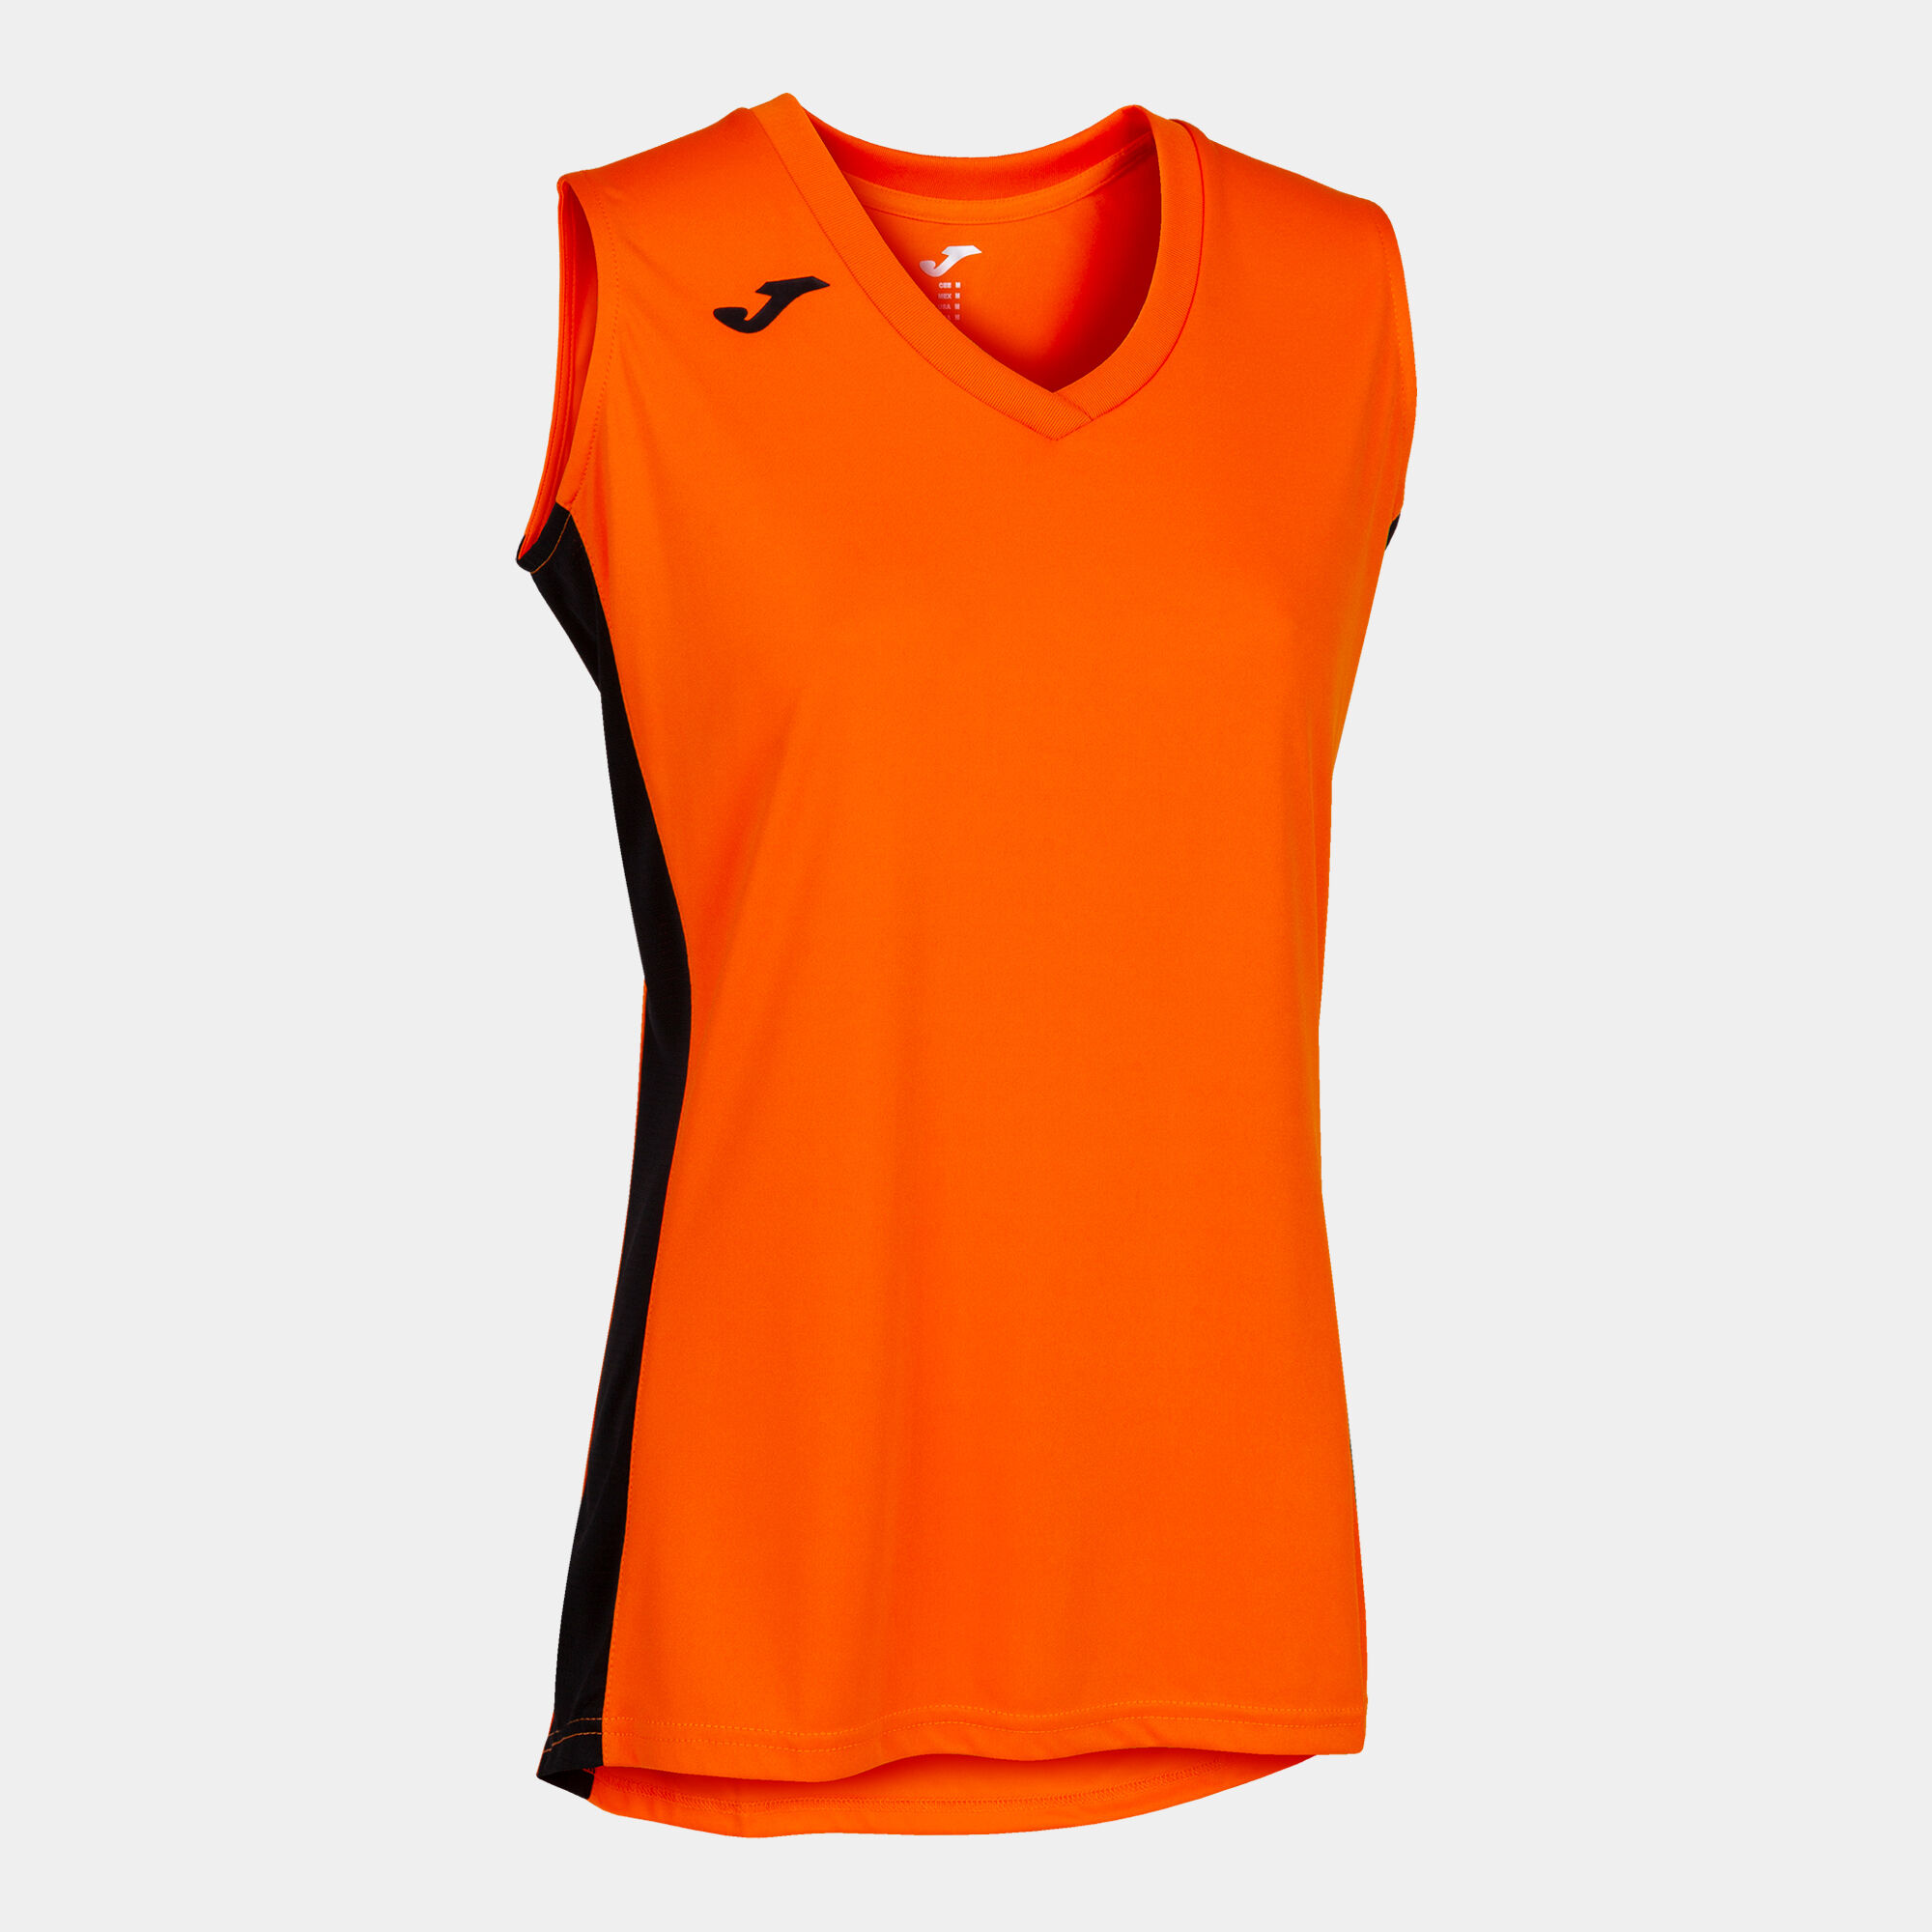 Shirt s/m frau Cancha III orange schwarz